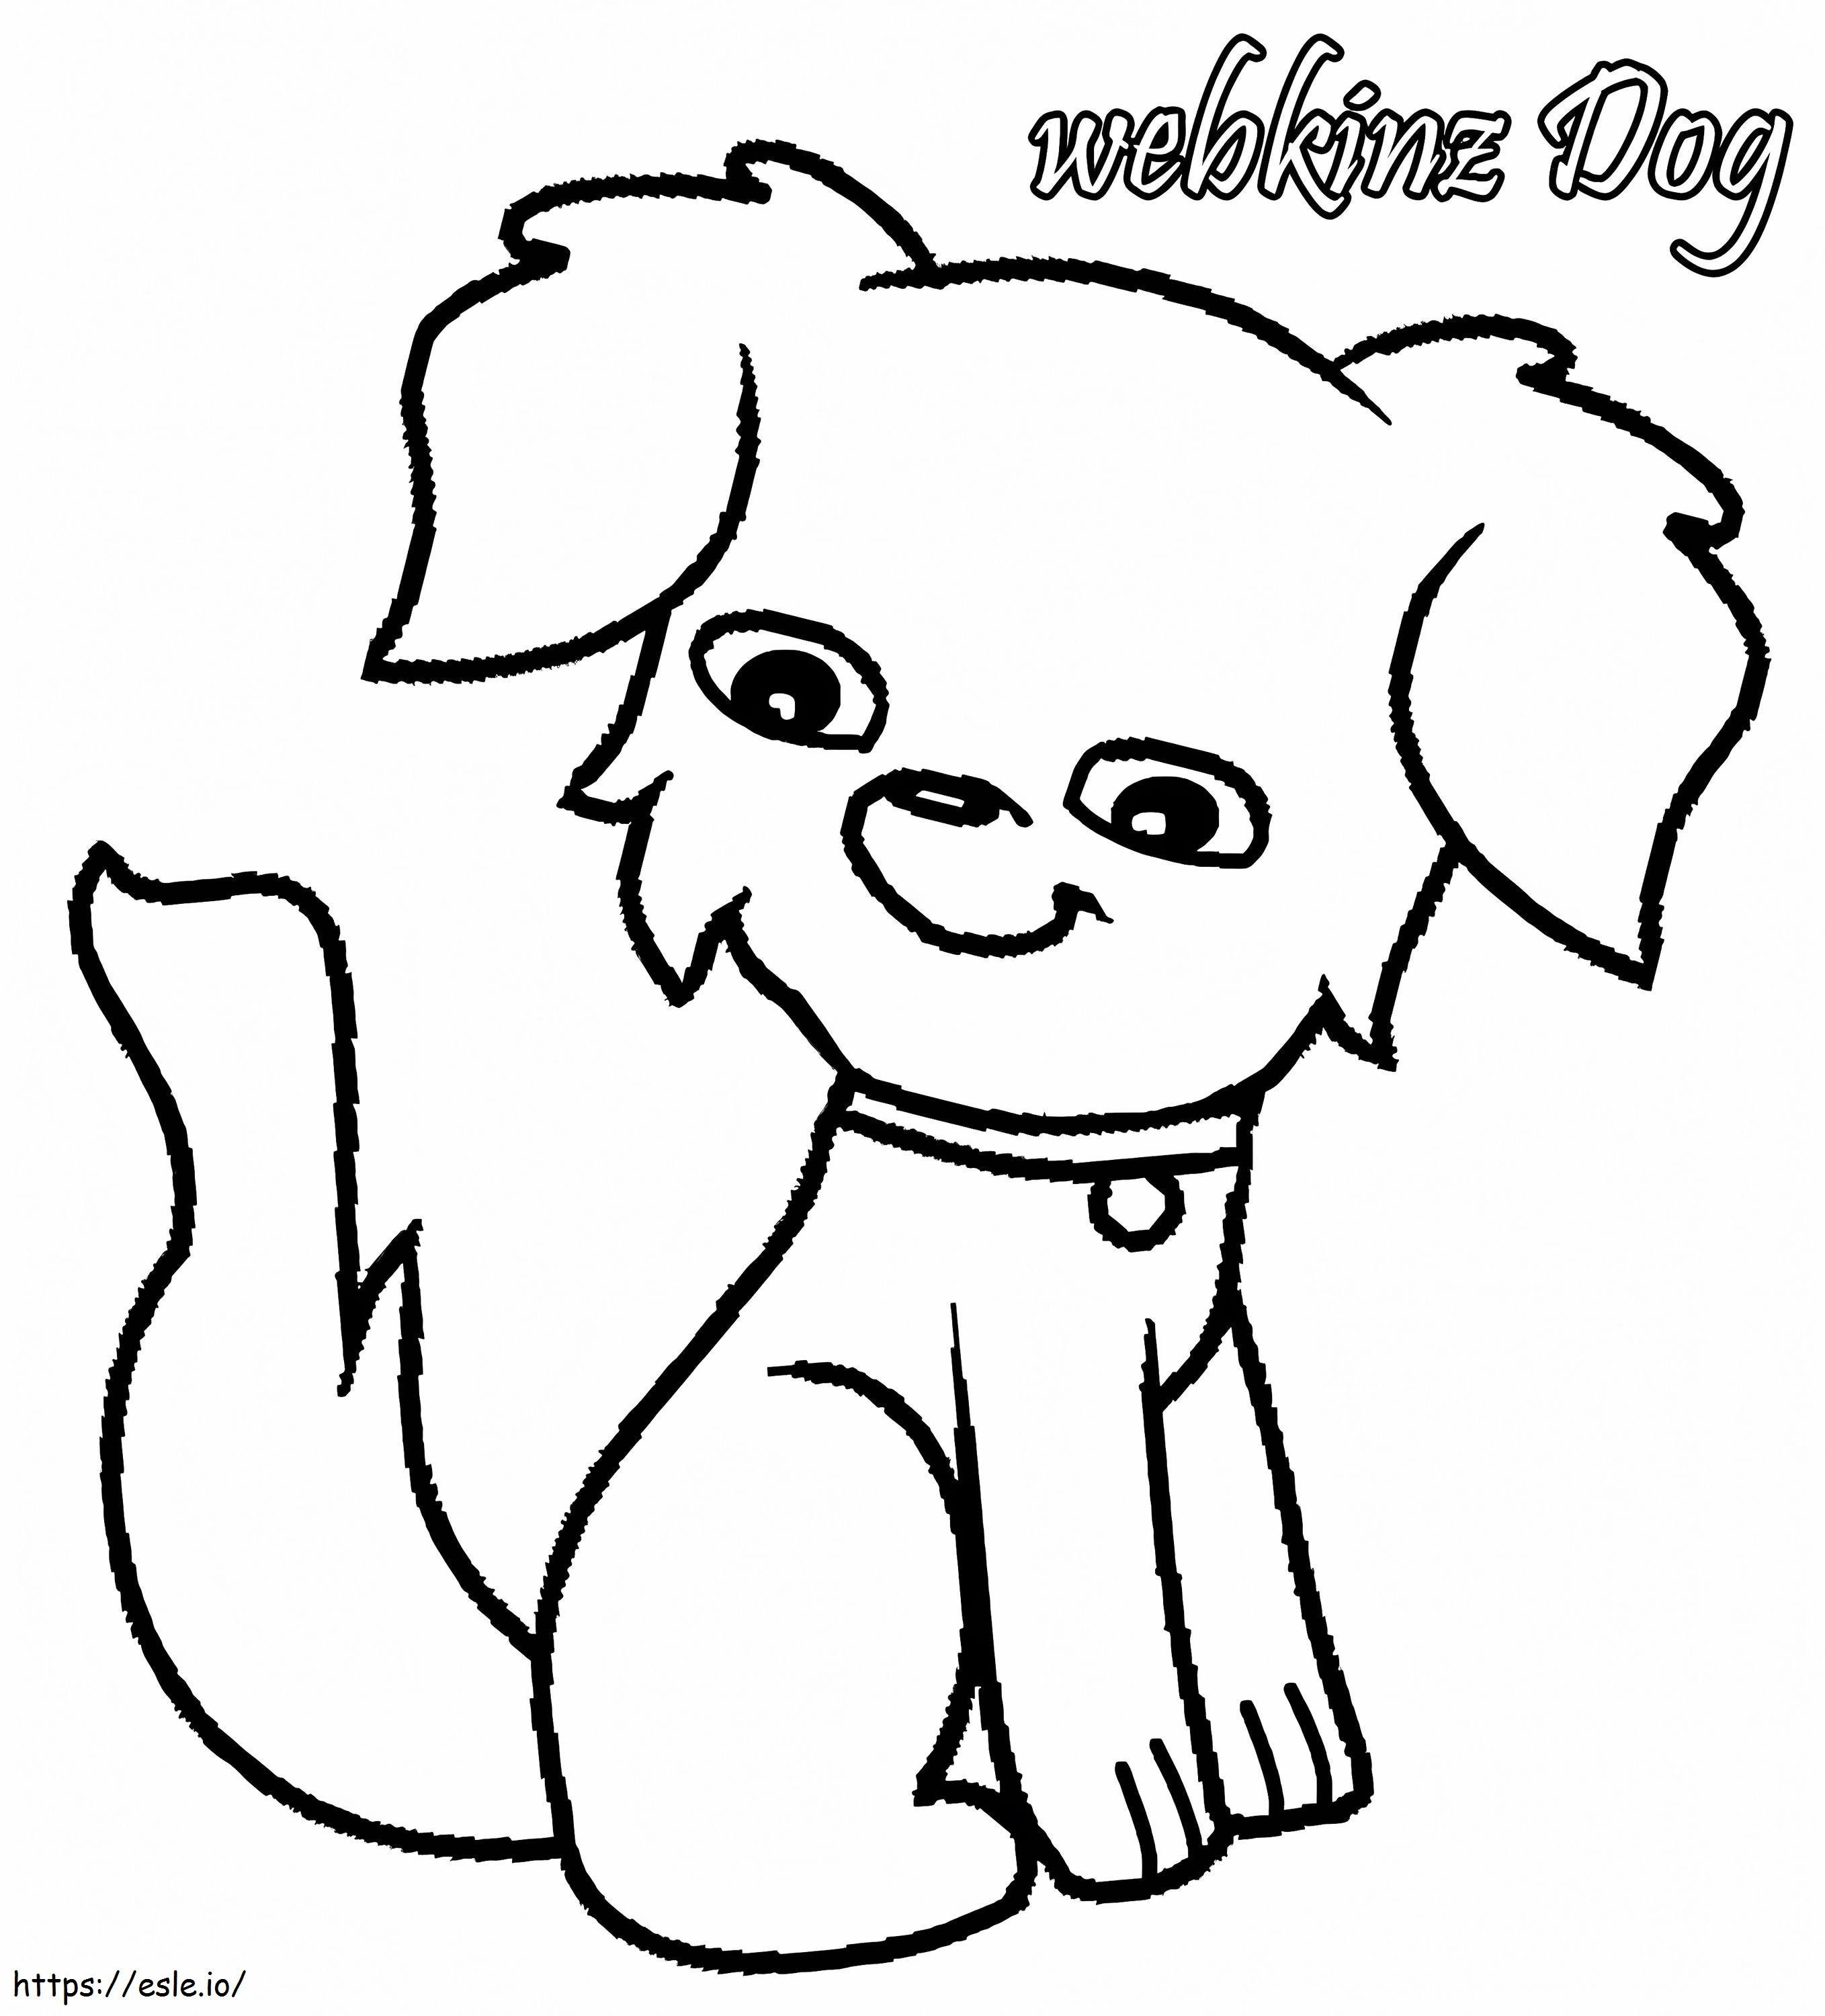 Süßer Webkinz-Hund ausmalbilder